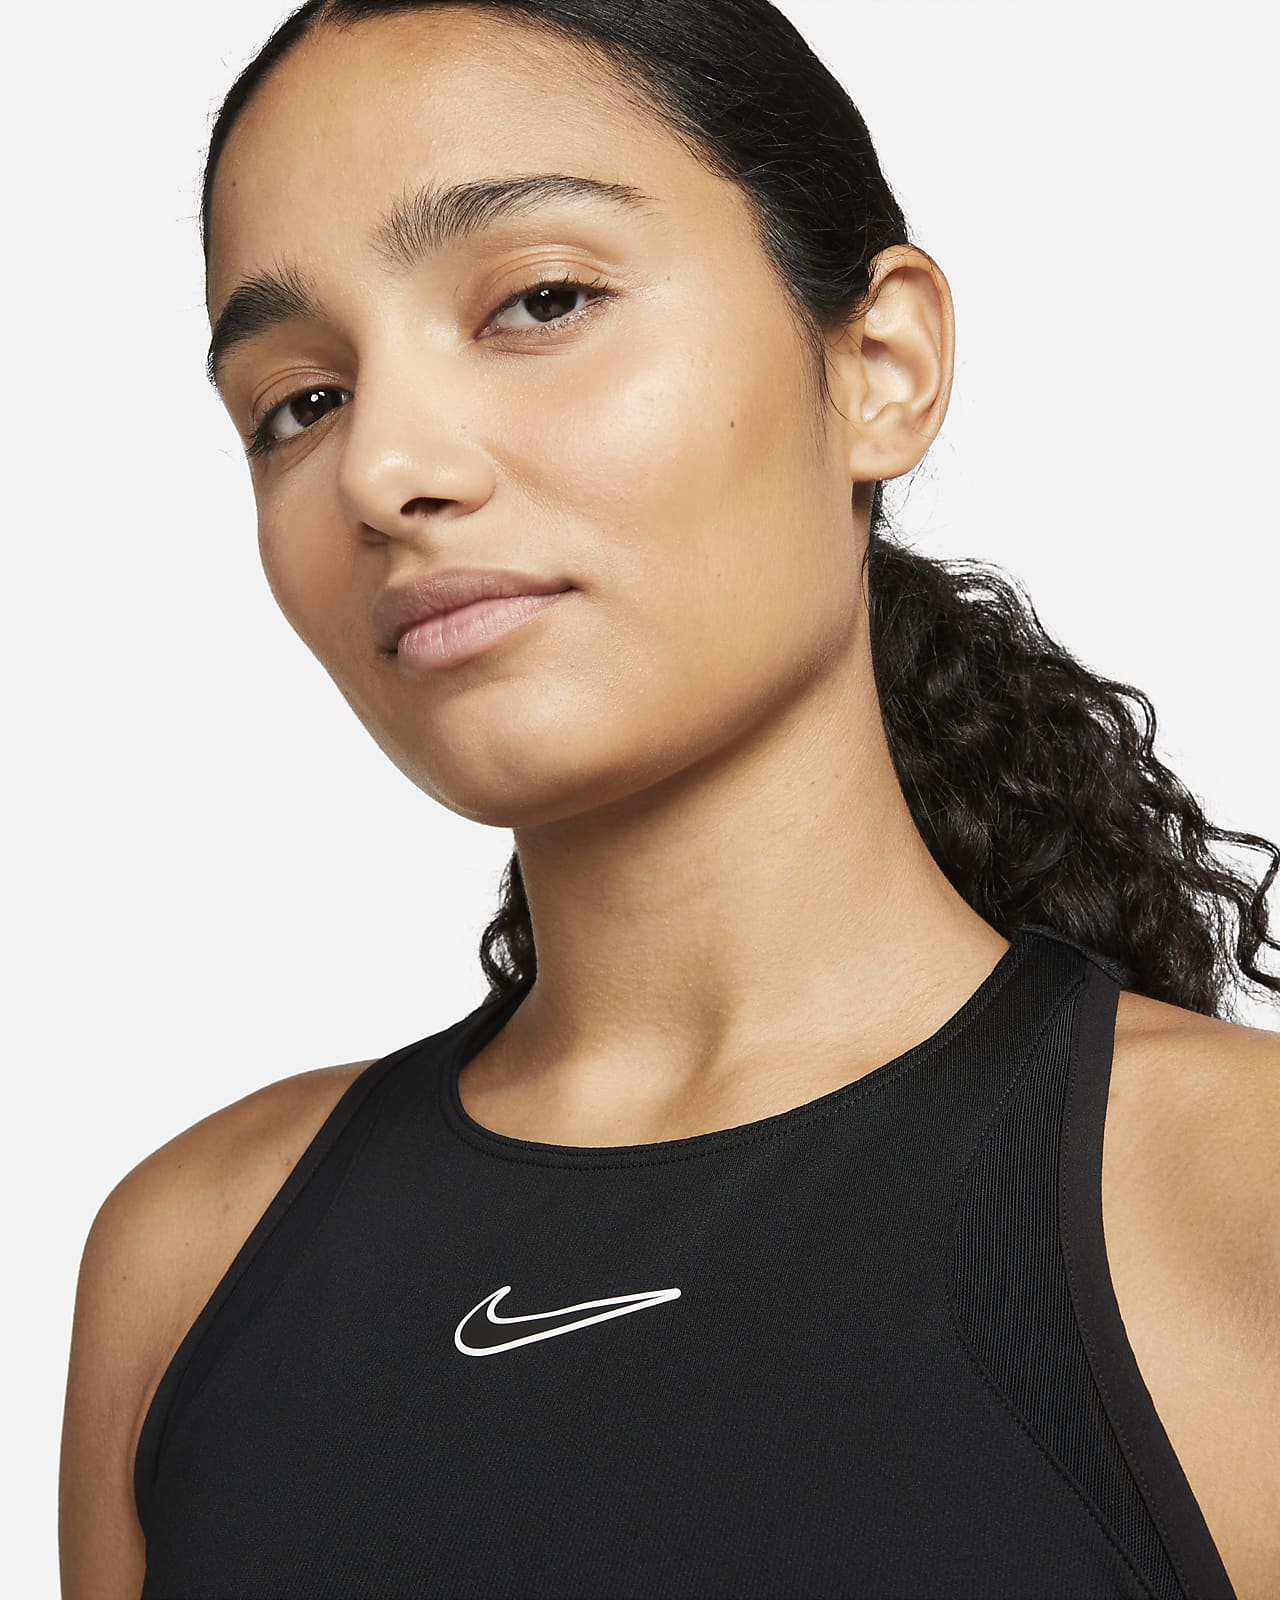 Nike Tennis dress NIKECOURT DRI-FIT SLAM in white